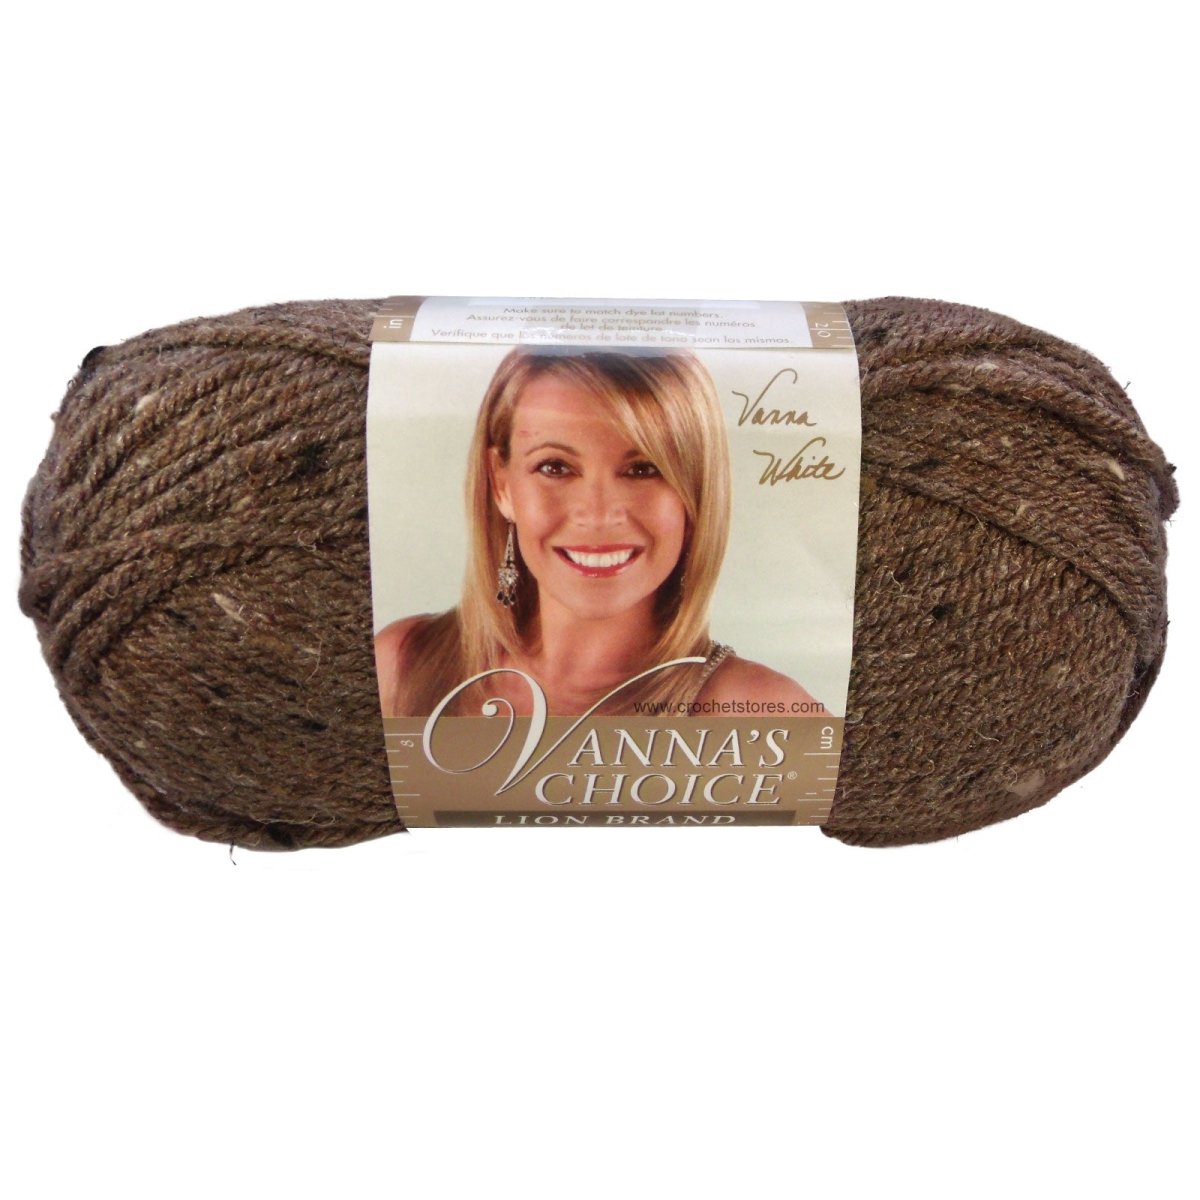 VANNAS CHOICE - Crochetstores860-403